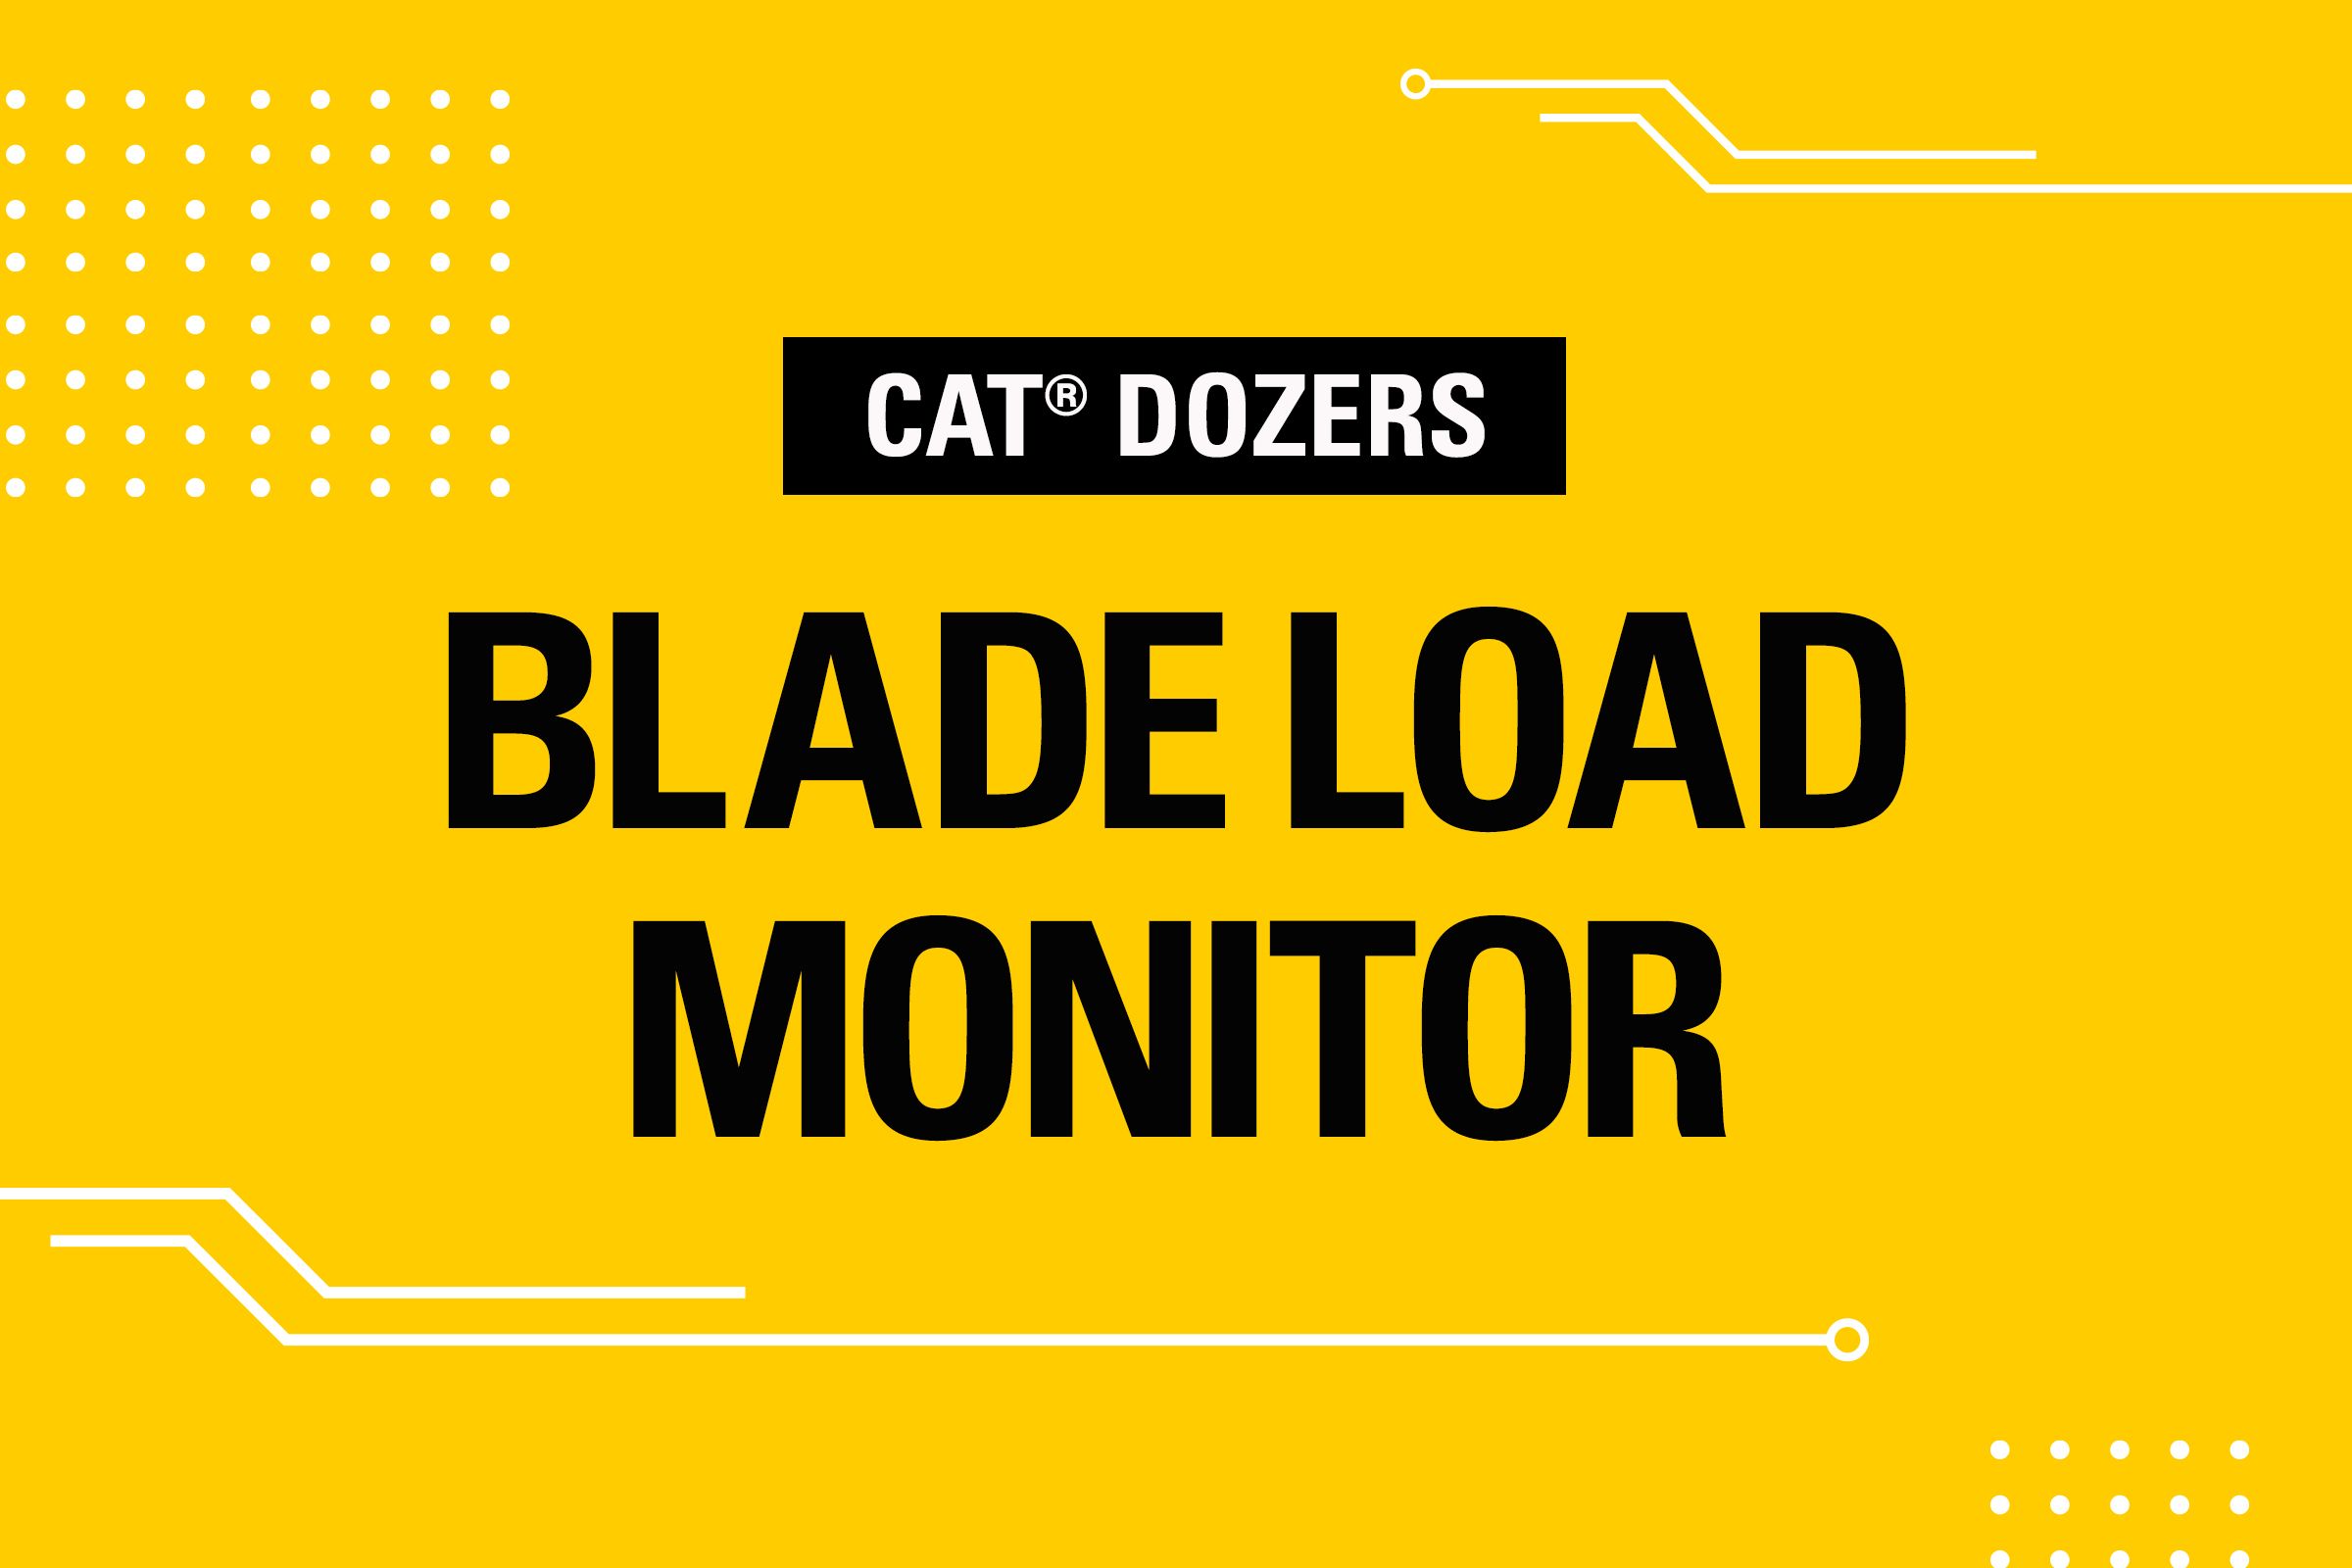 Blade Load Monitor